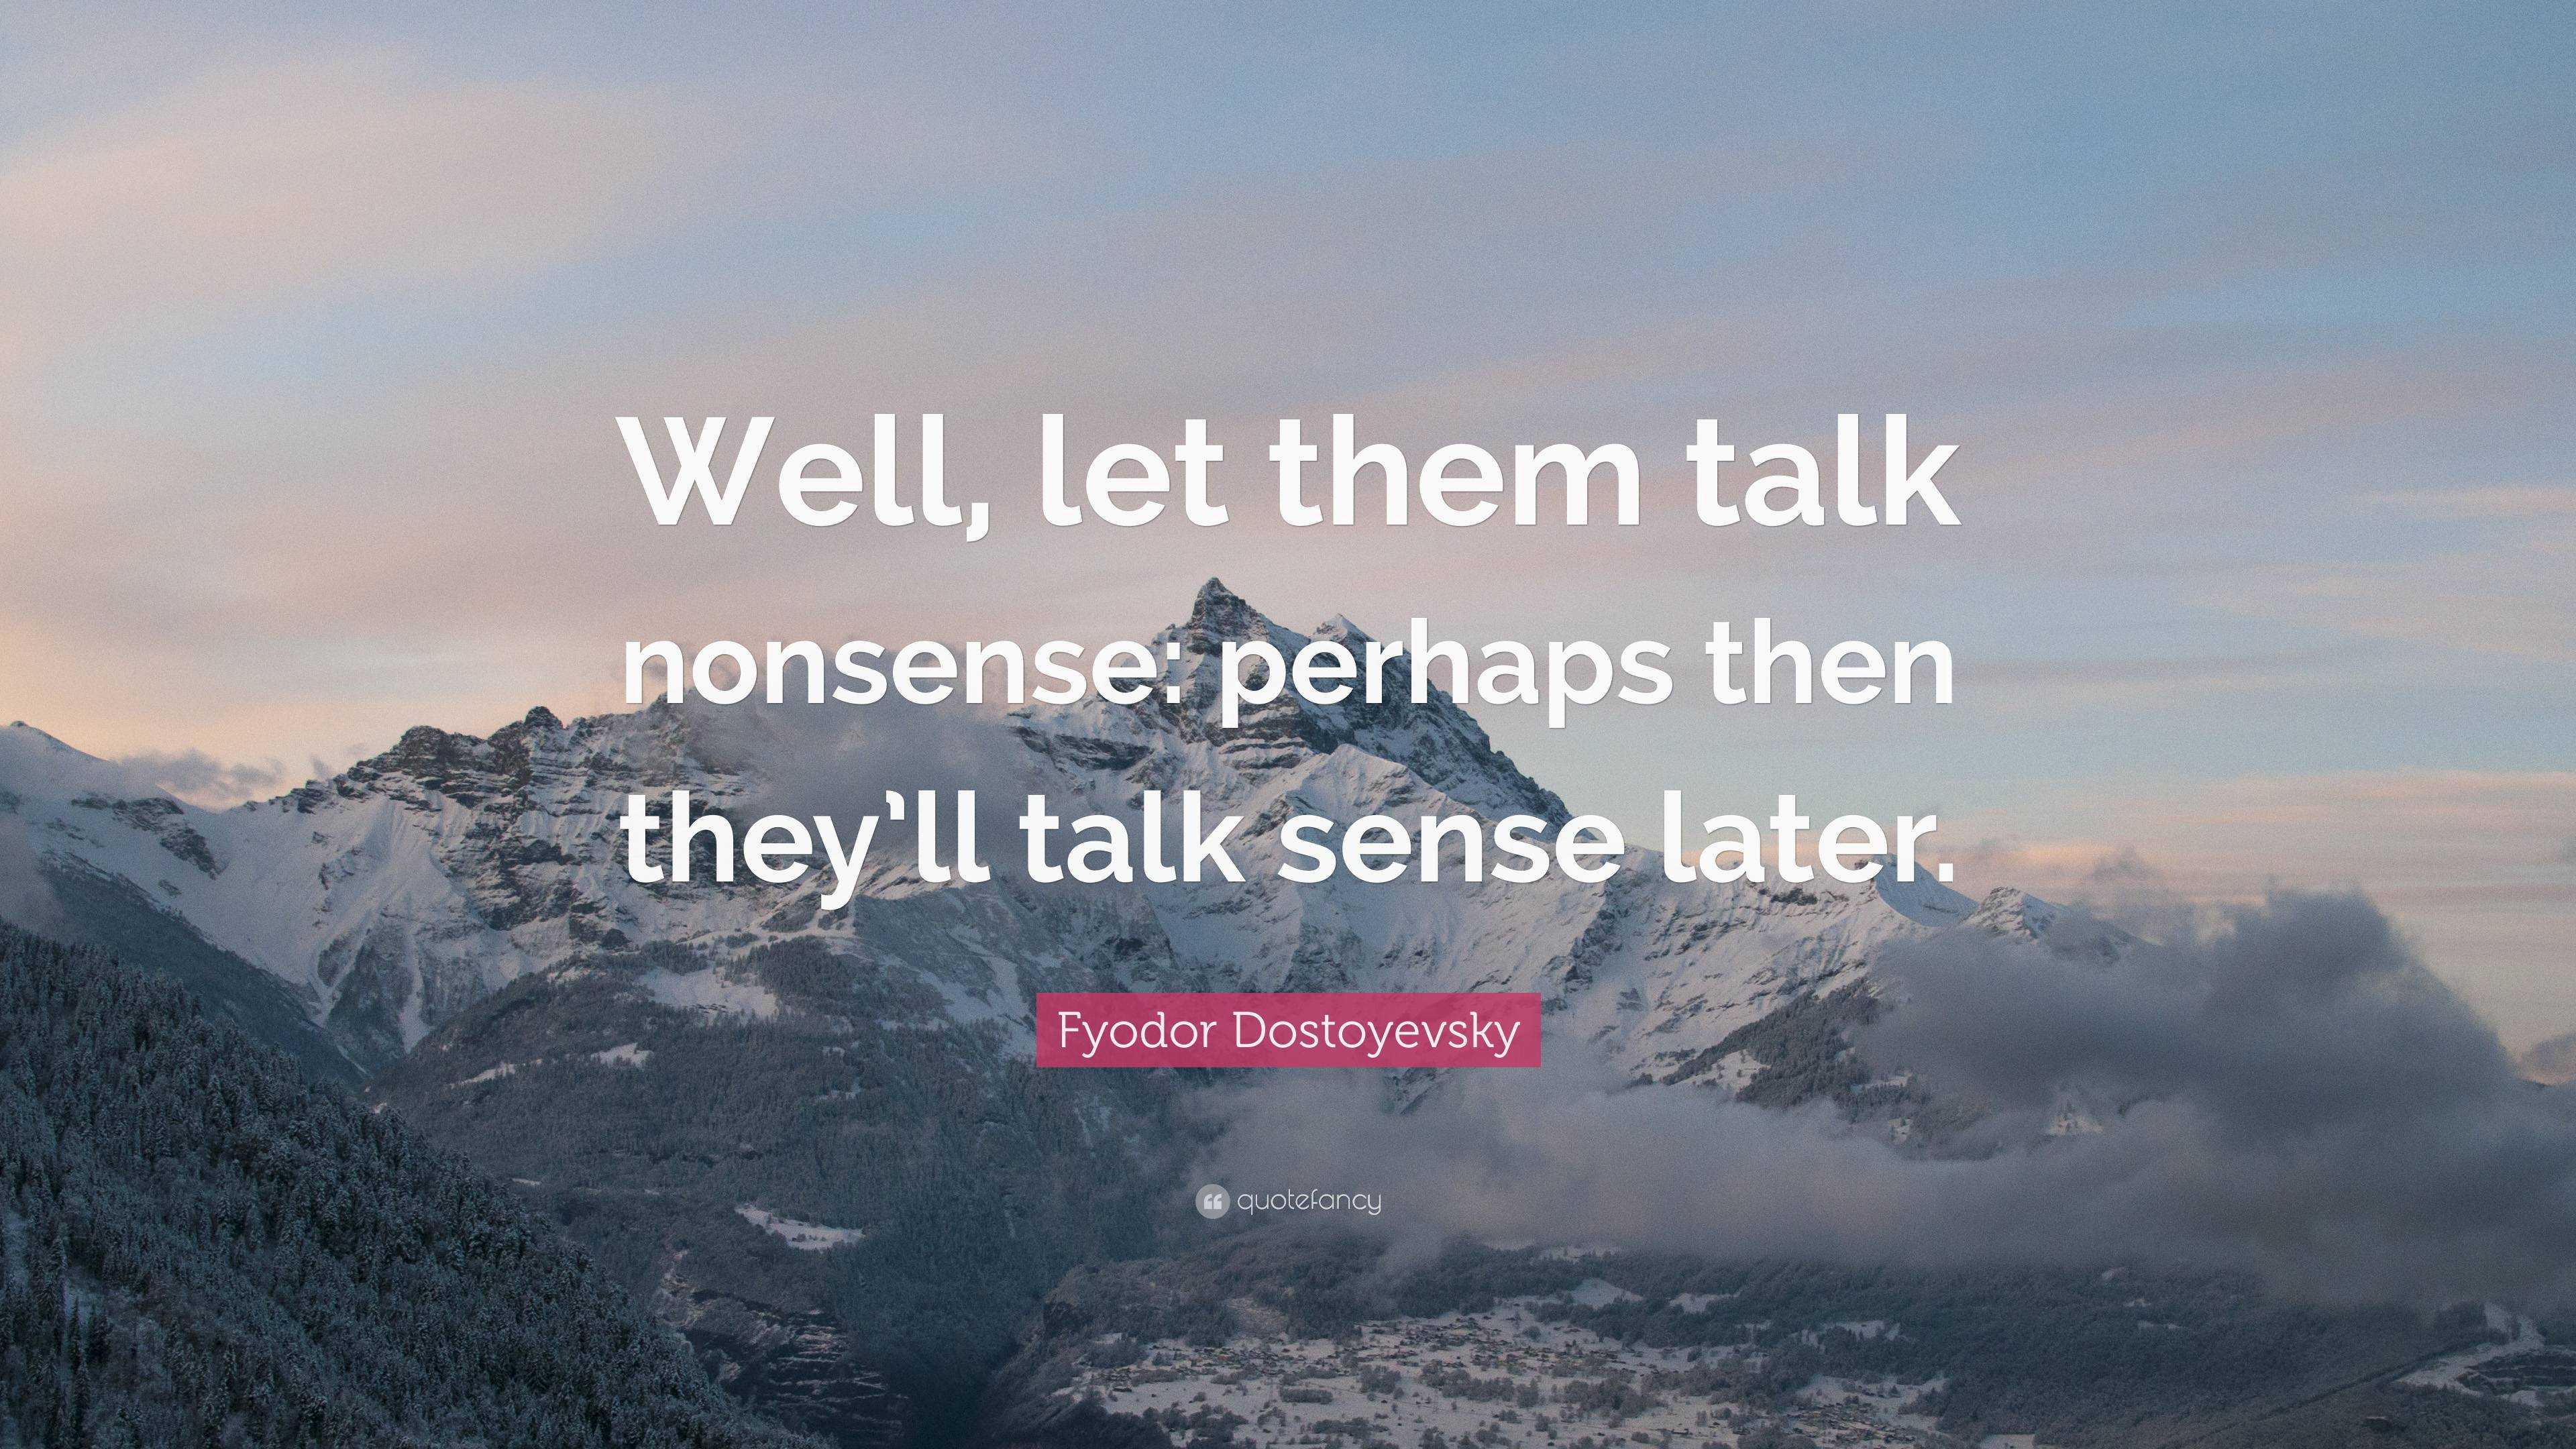 Fyodor Dostoyevsky Quote: “Well, let them talk nonsense: perhaps then ...